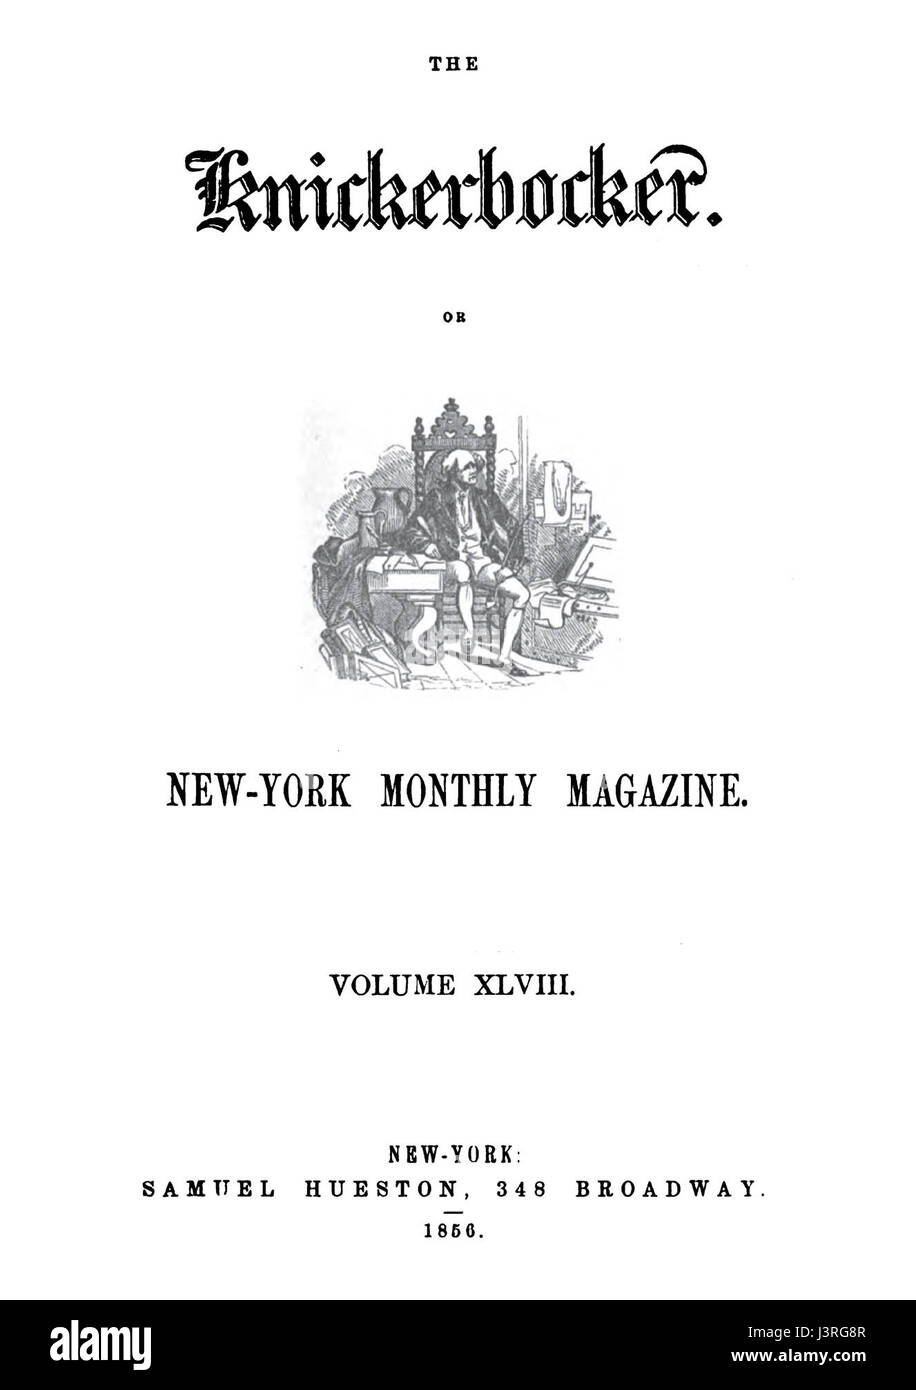 Knickerbocker Magazine Cover 1856 Stock Photo